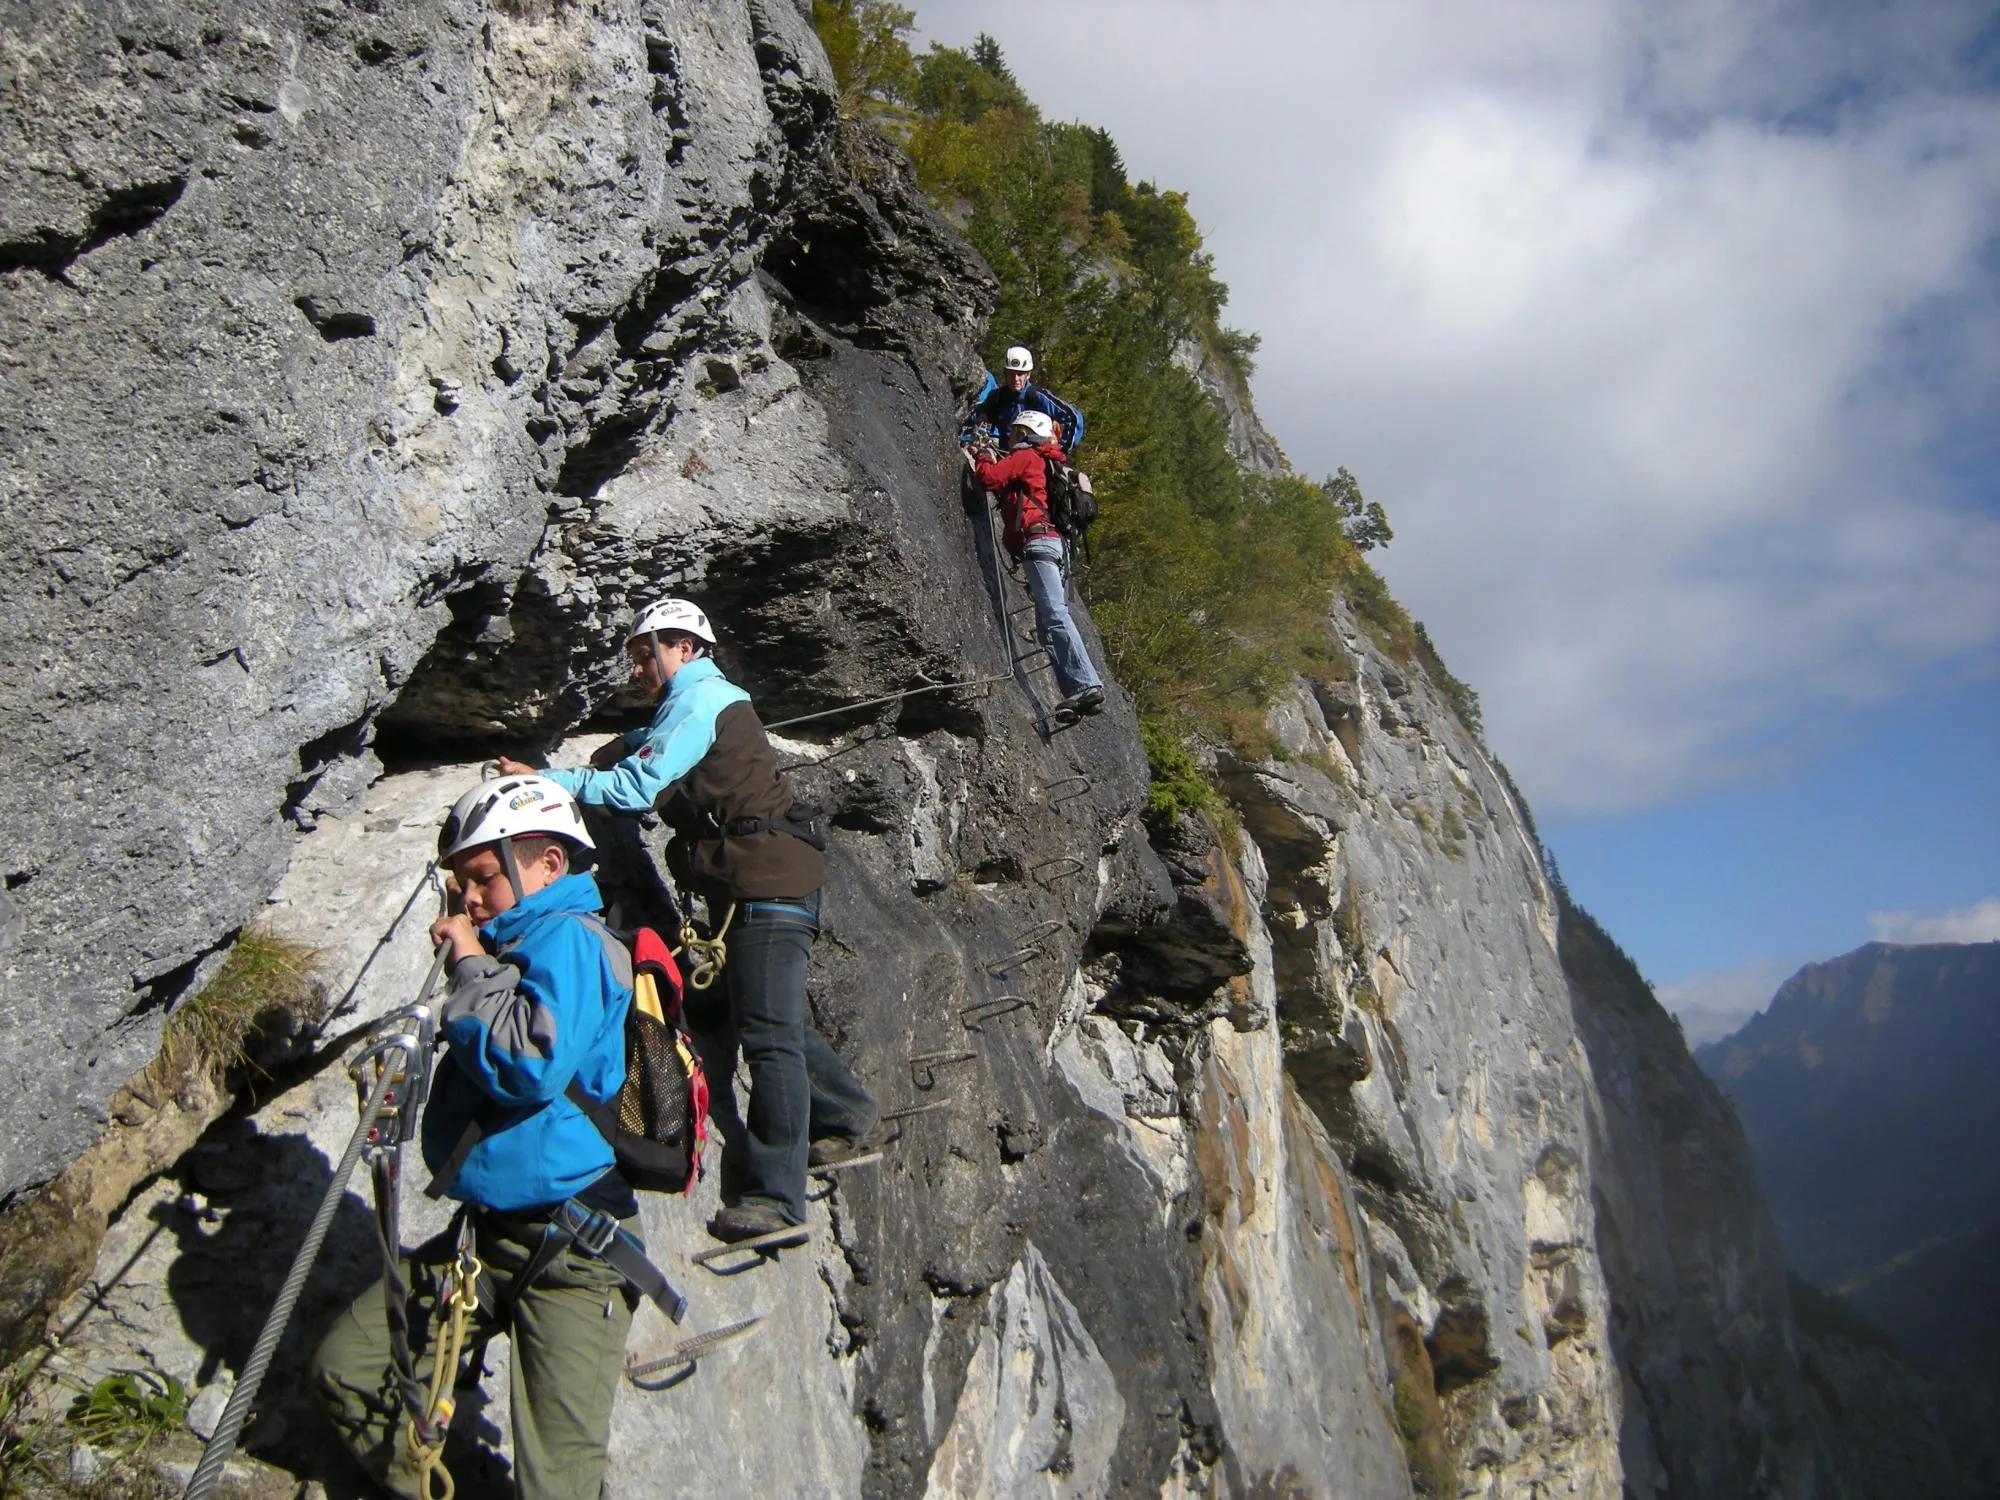 Klettersteig Murren-Gimmelwald in Switzerland, Europe | Ice Climbing,Climbing - Rated 1.1